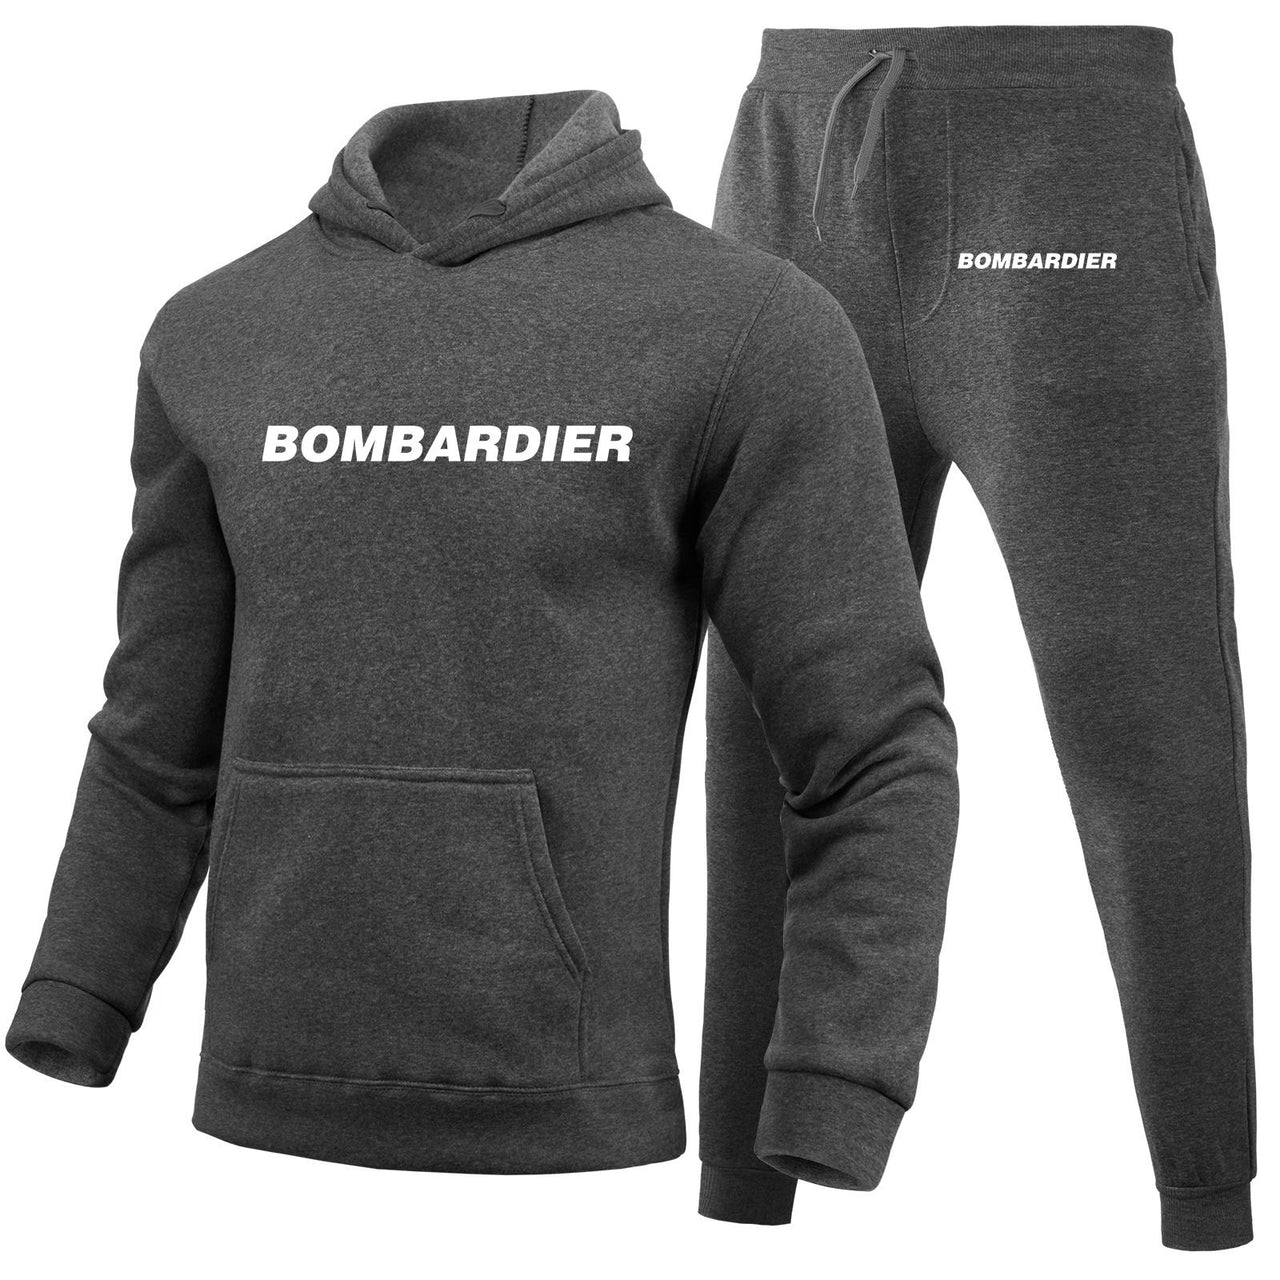 Bombardier & Text Designed Hoodies & Sweatpants Set